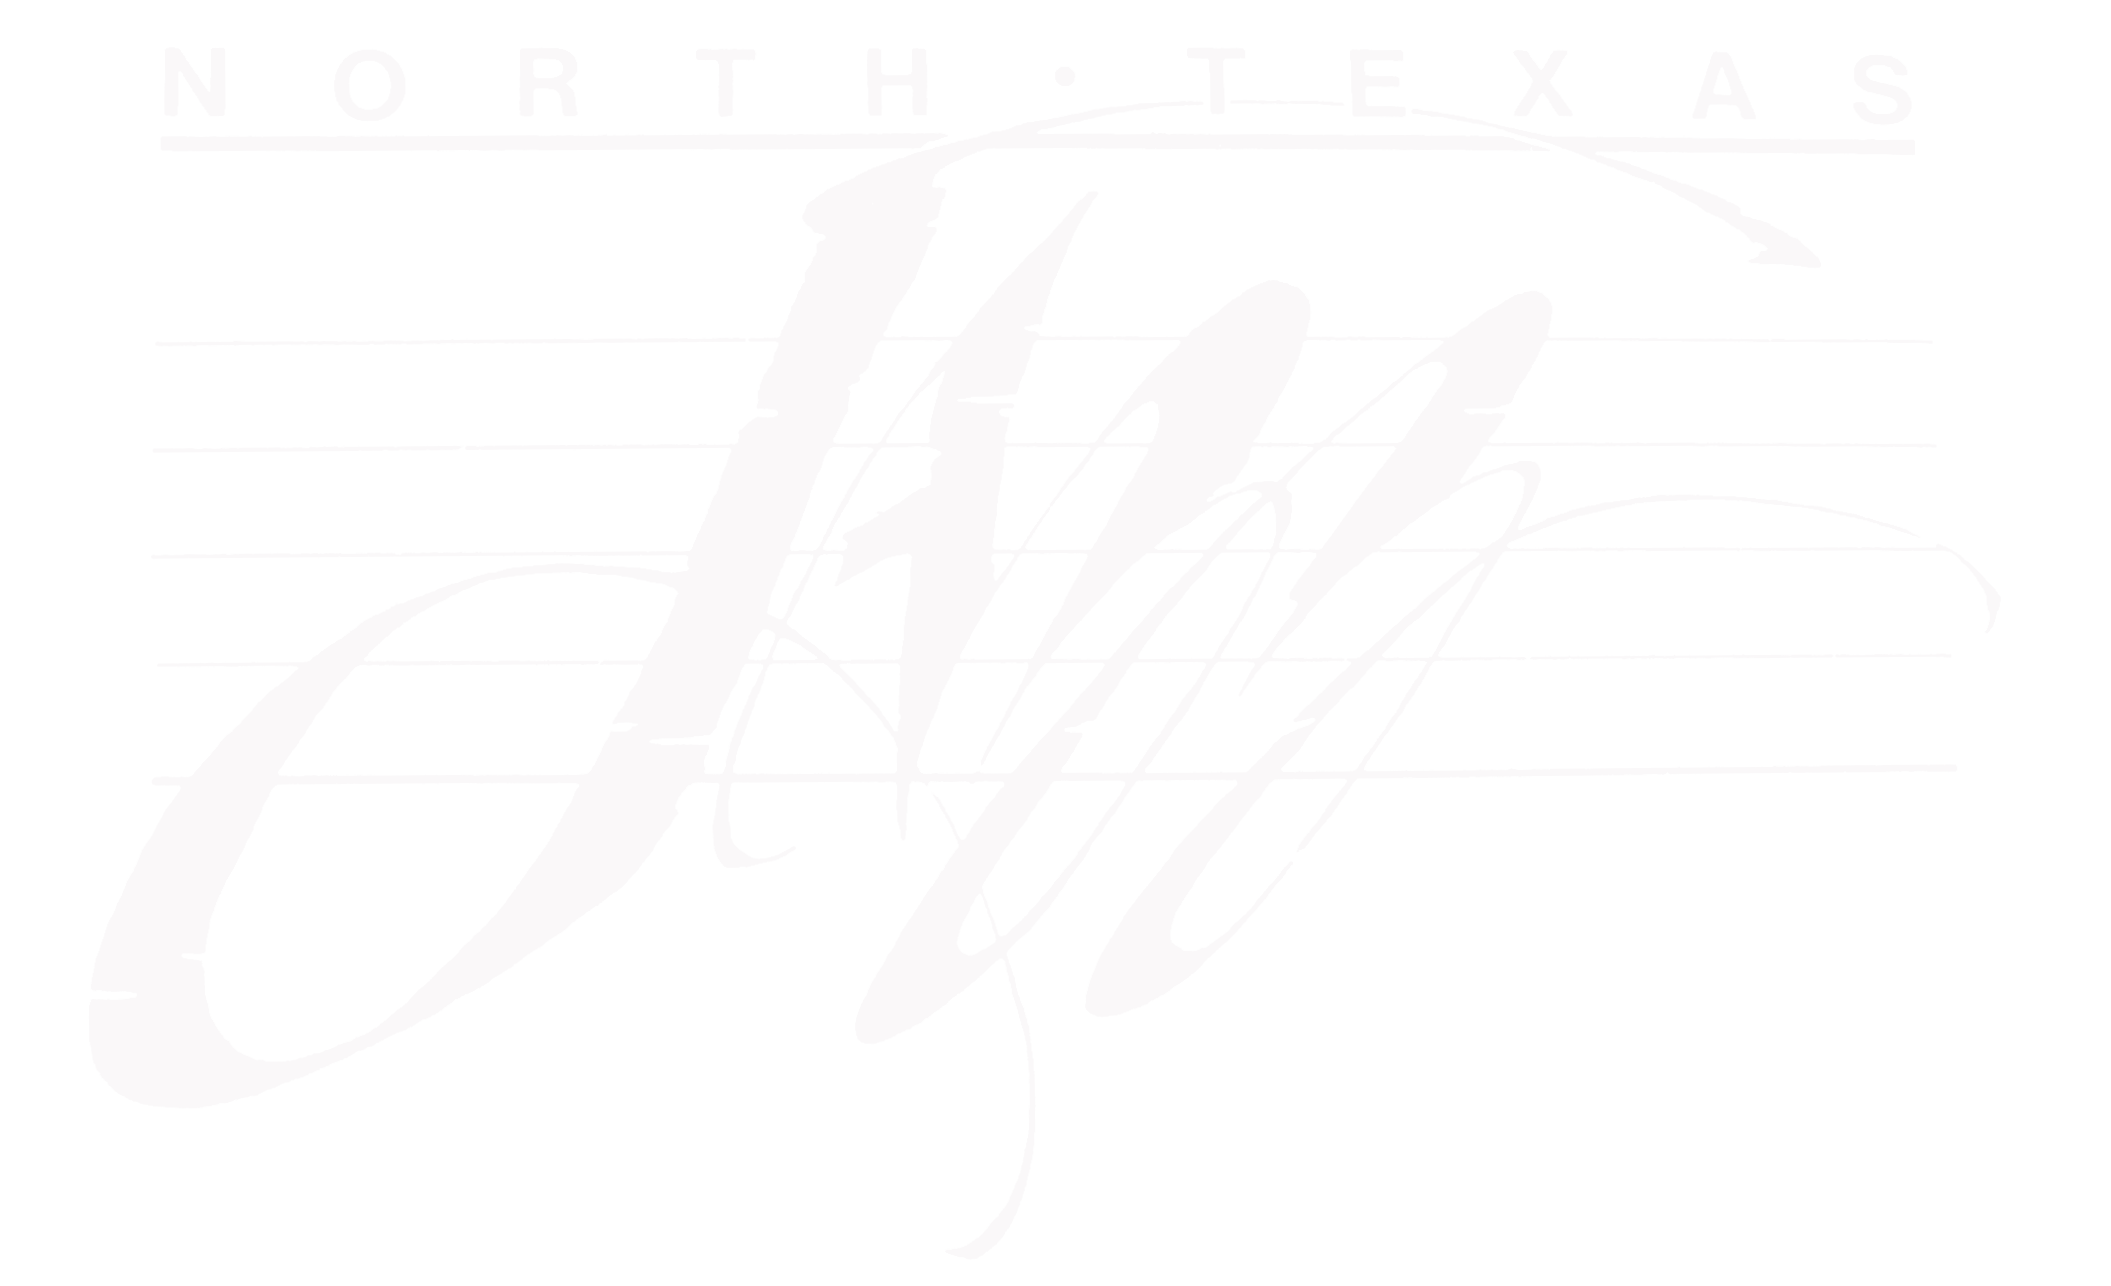 1980s Jazz logo